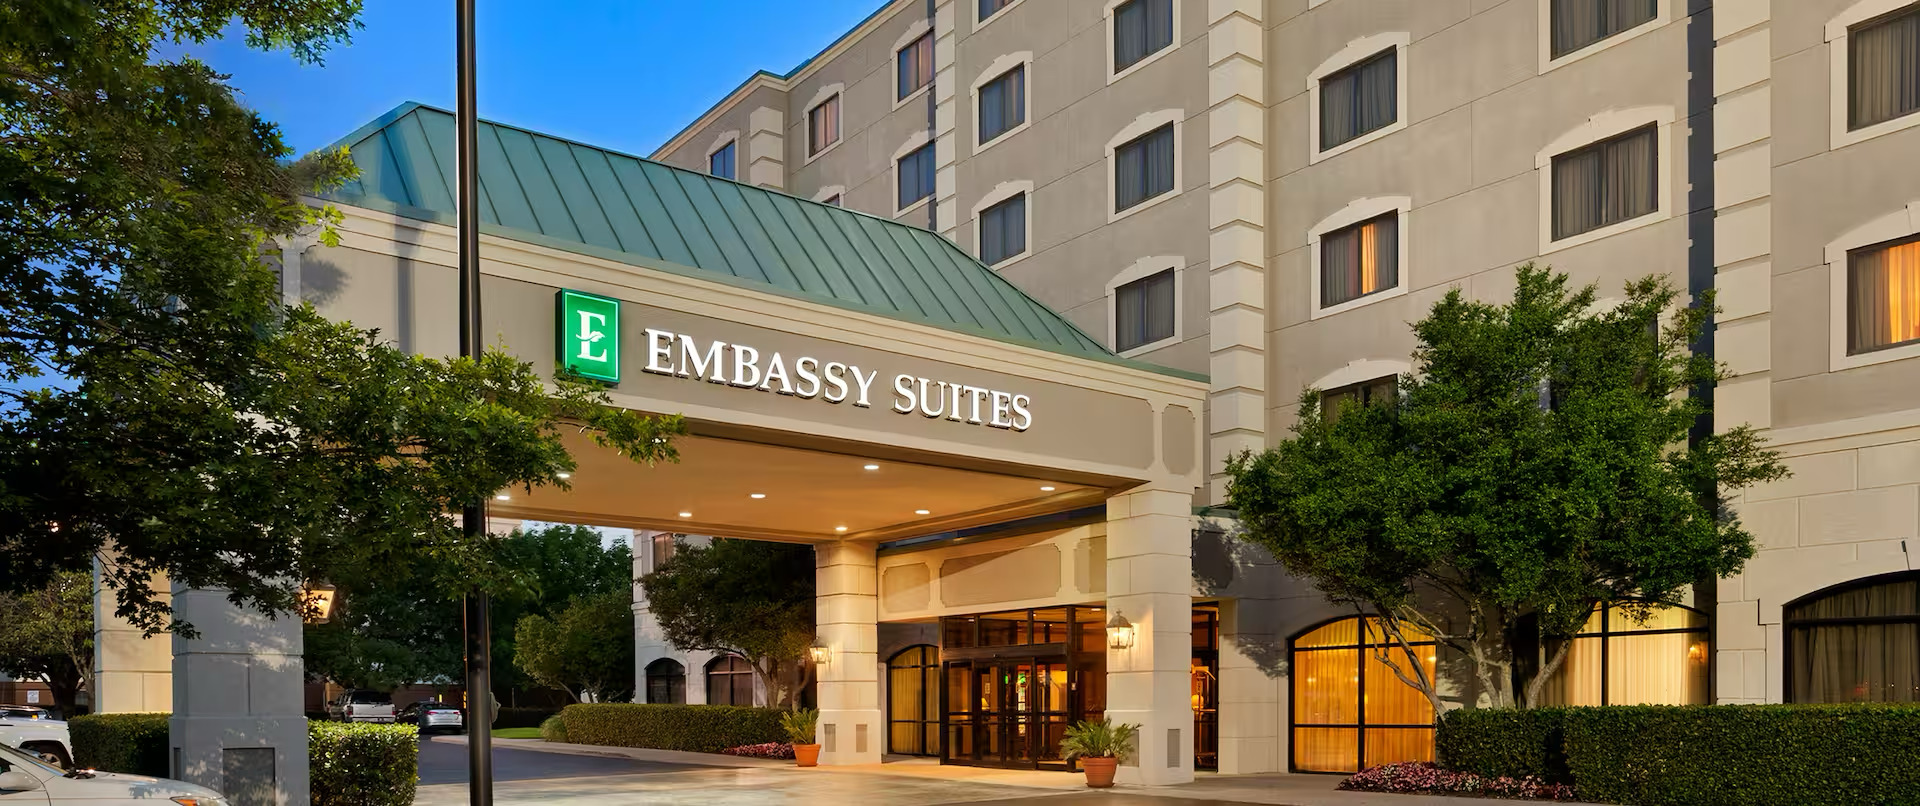 Photo of Embassy Suites by Hilton Dallas Near the Galleria, Dallas, TX